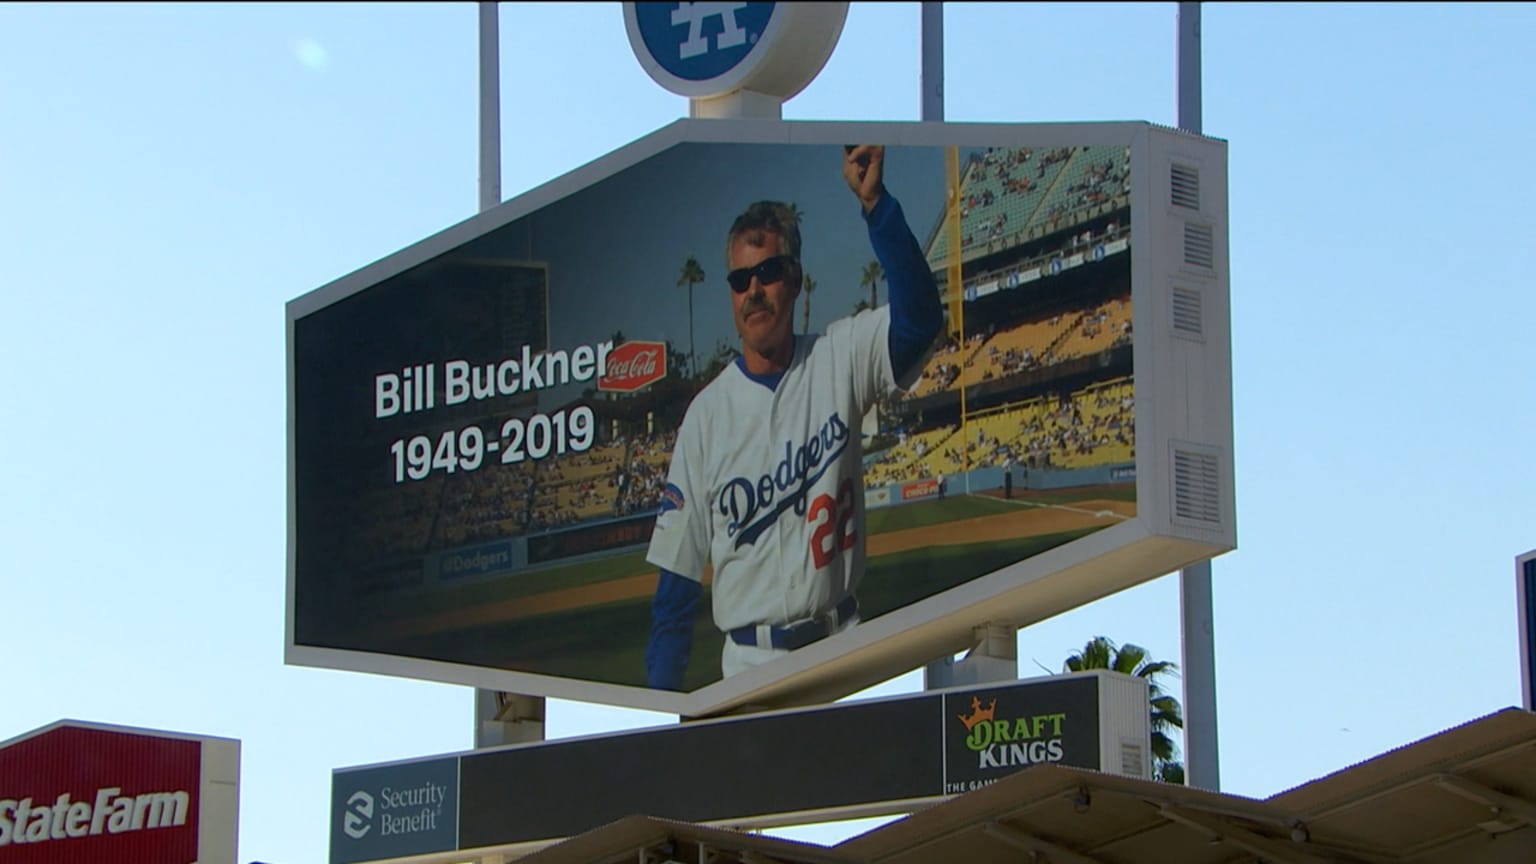 Video Tributes pour in for baseball legend Bill Buckner - ABC News